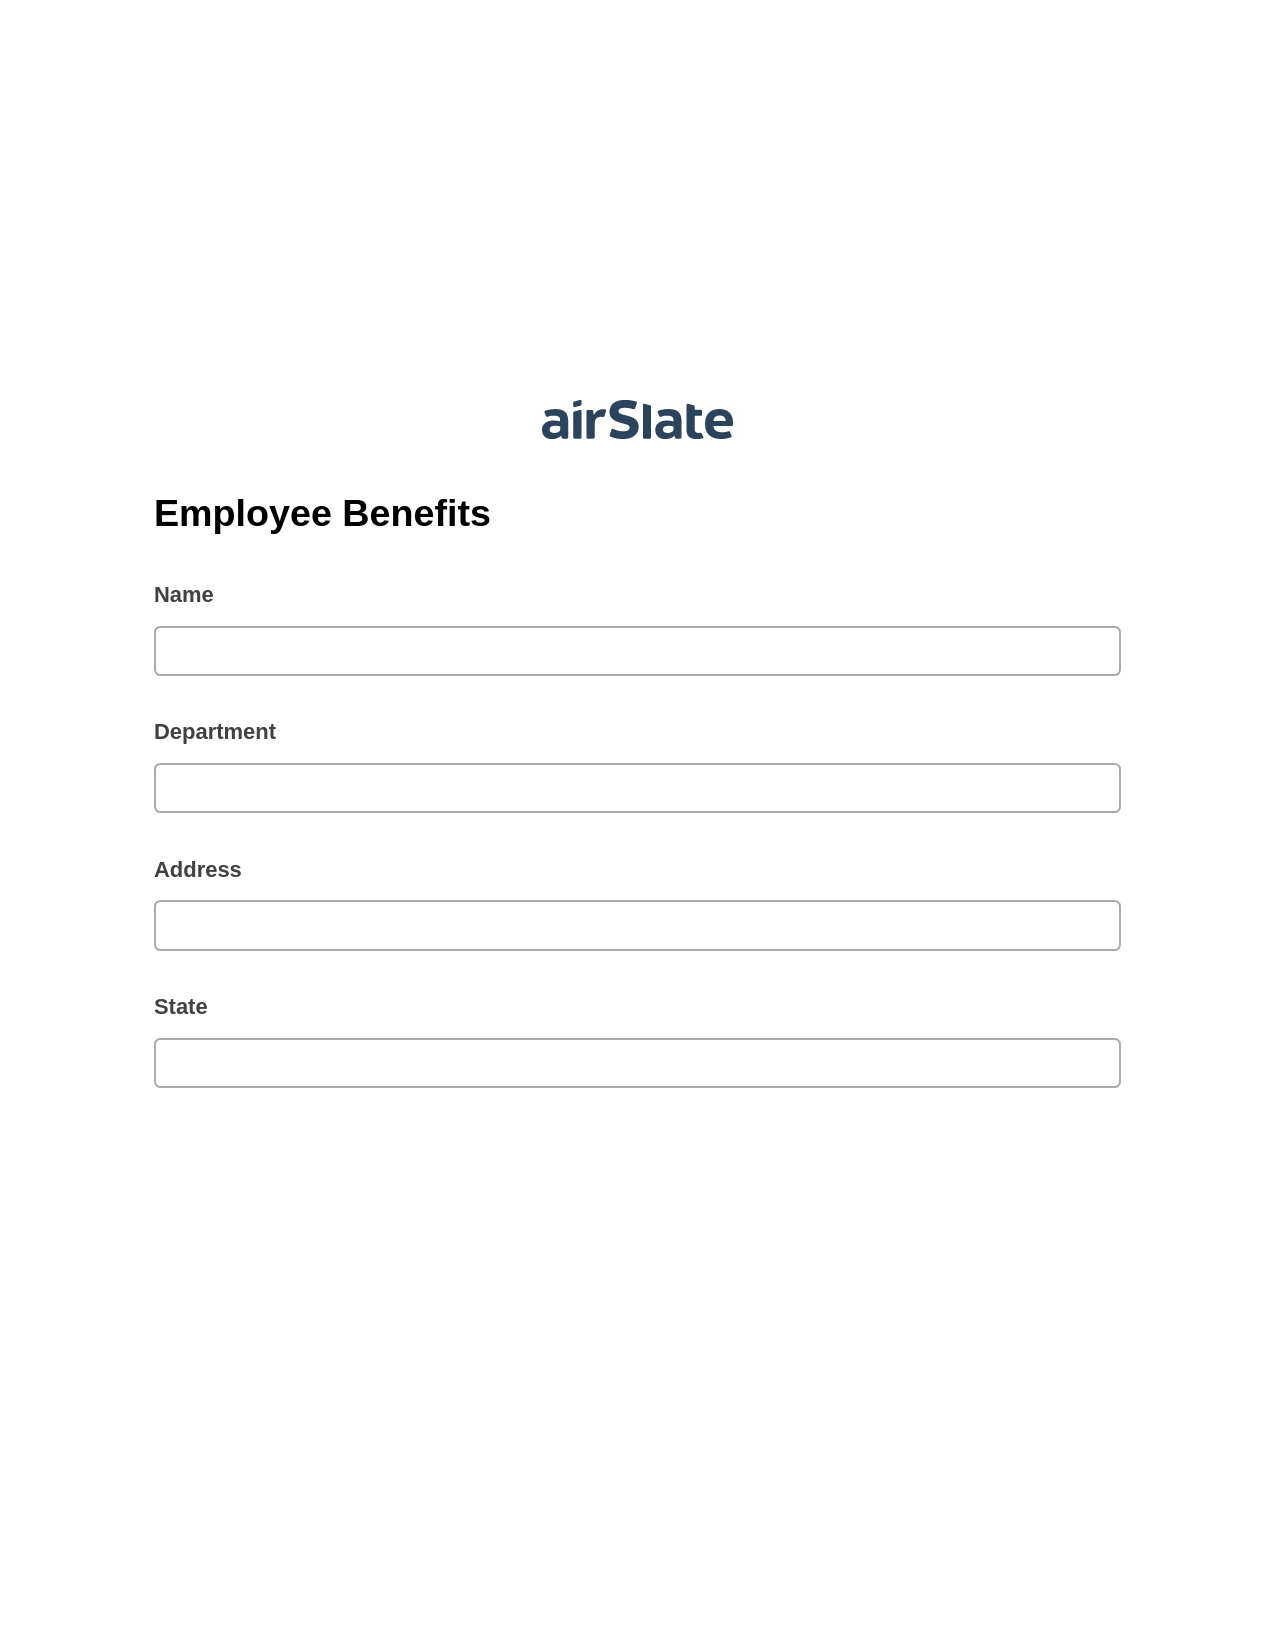 Employee Benefits Pre-fill from Google Sheets Bot, Create slate addon, Google Drive Bot